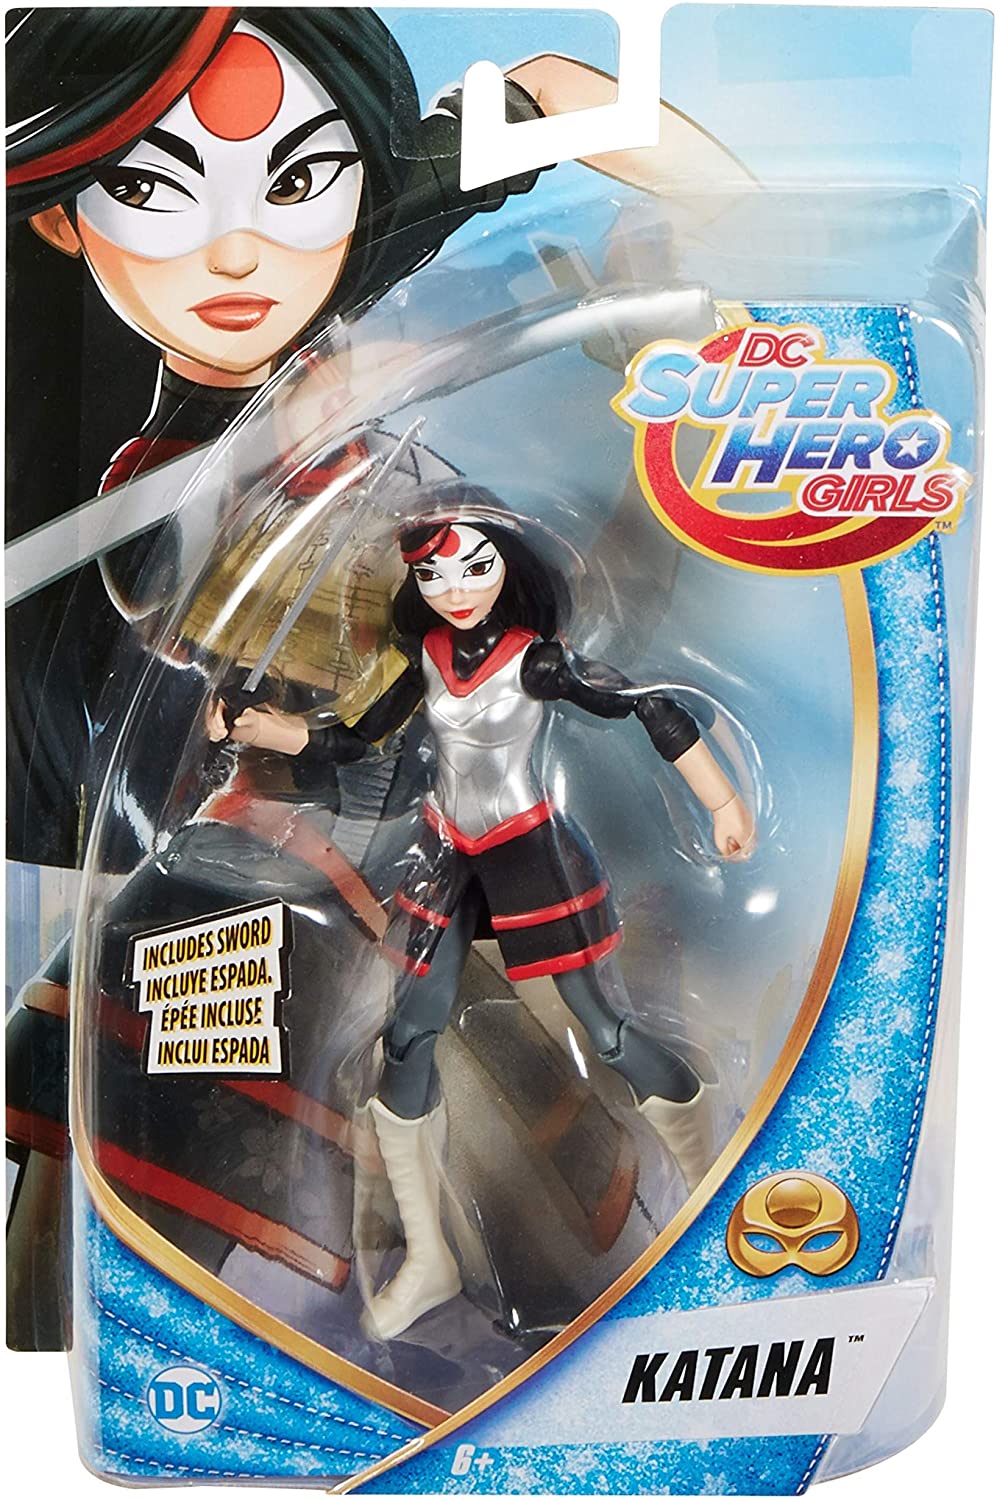 Super Hero Girls - DC Katana 6" Action Figure by Mattel SALE